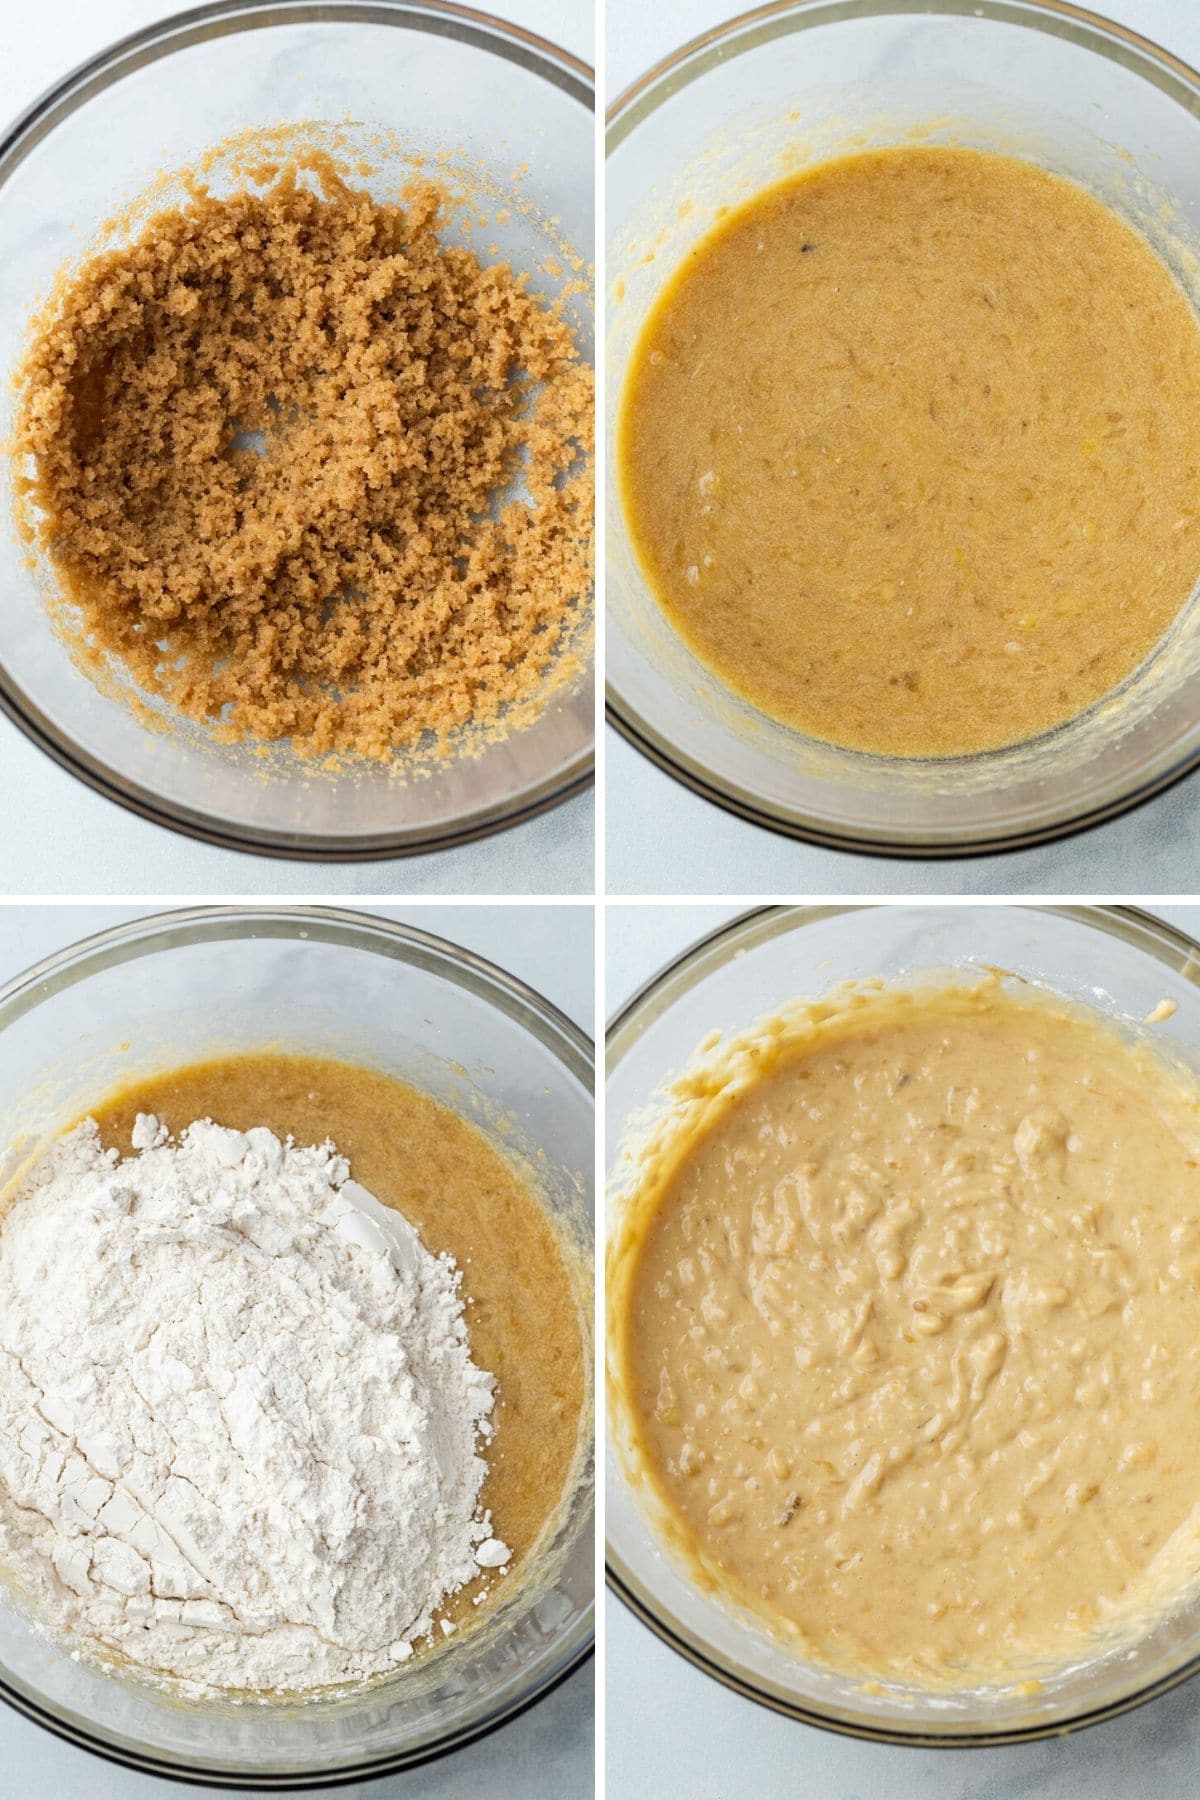 Process shots showing how to make banana bread.